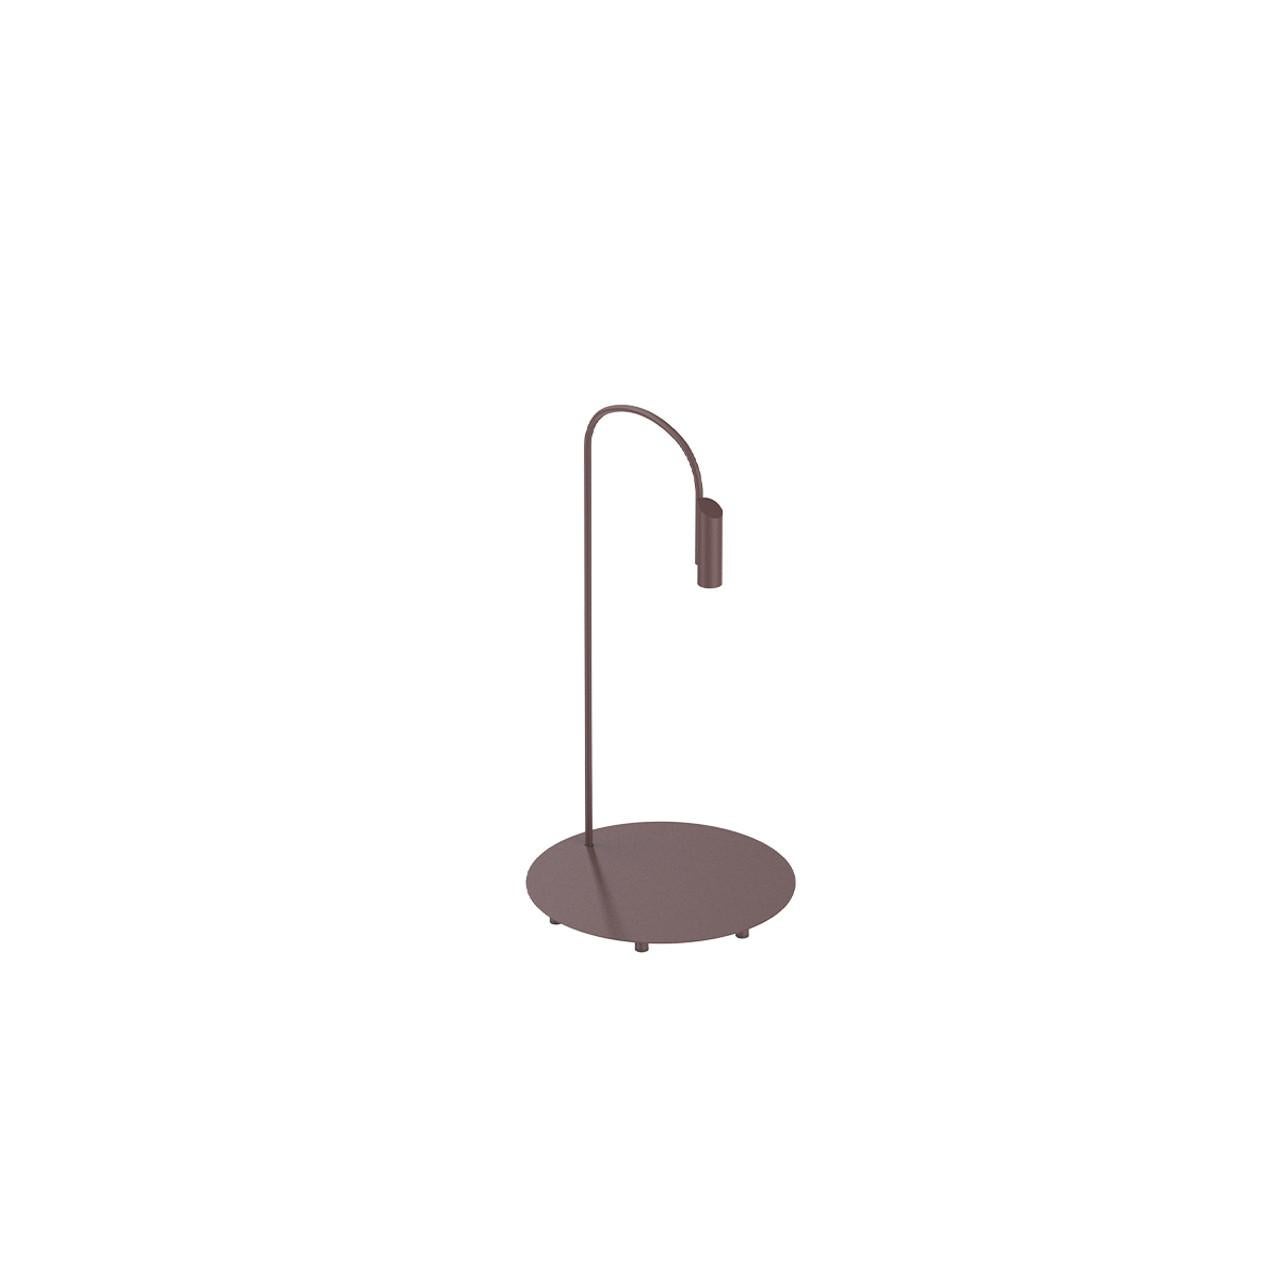 Flos Caule 2700K Model 2 Outdoor Floor Lamp in Deep Brown with Regular Shade For Sale